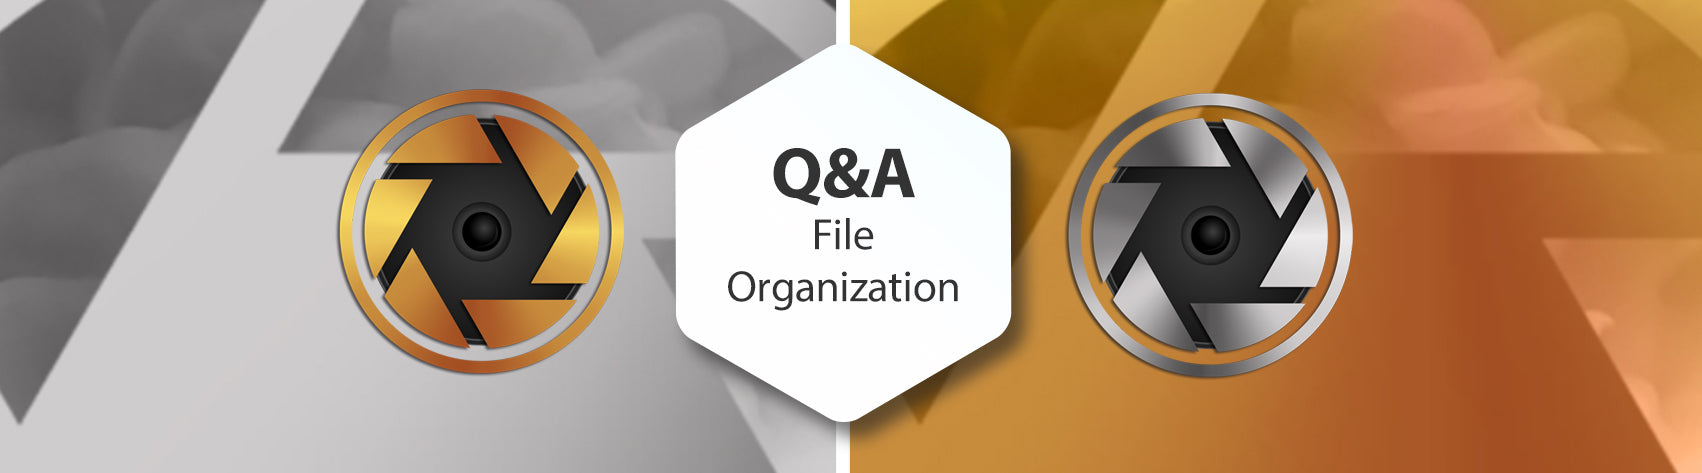 Q&A - File Organization